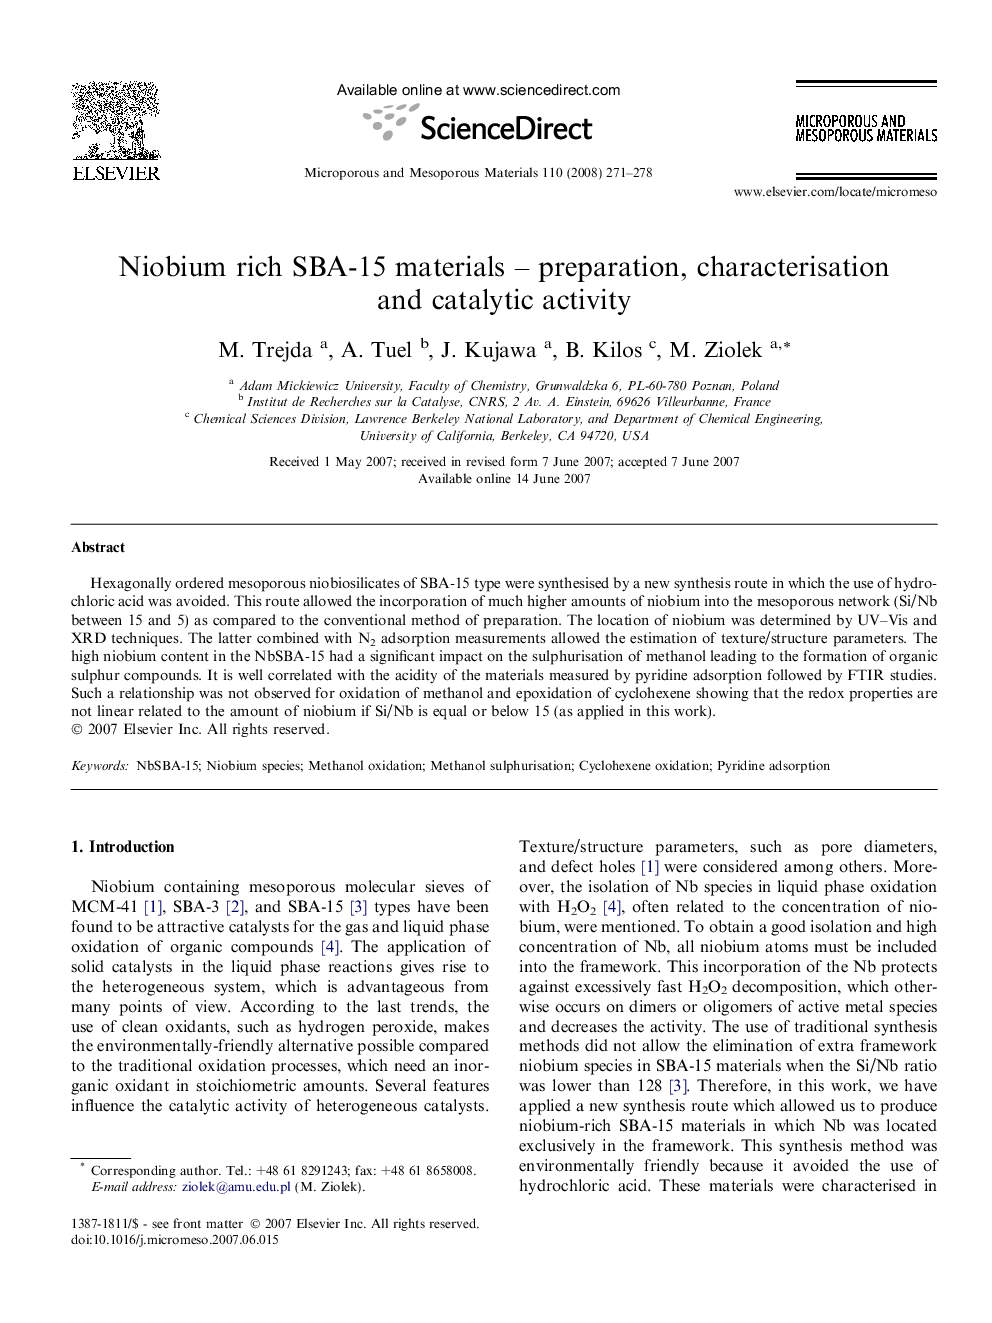 Niobium rich SBA-15 materials – preparation, characterisation and catalytic activity